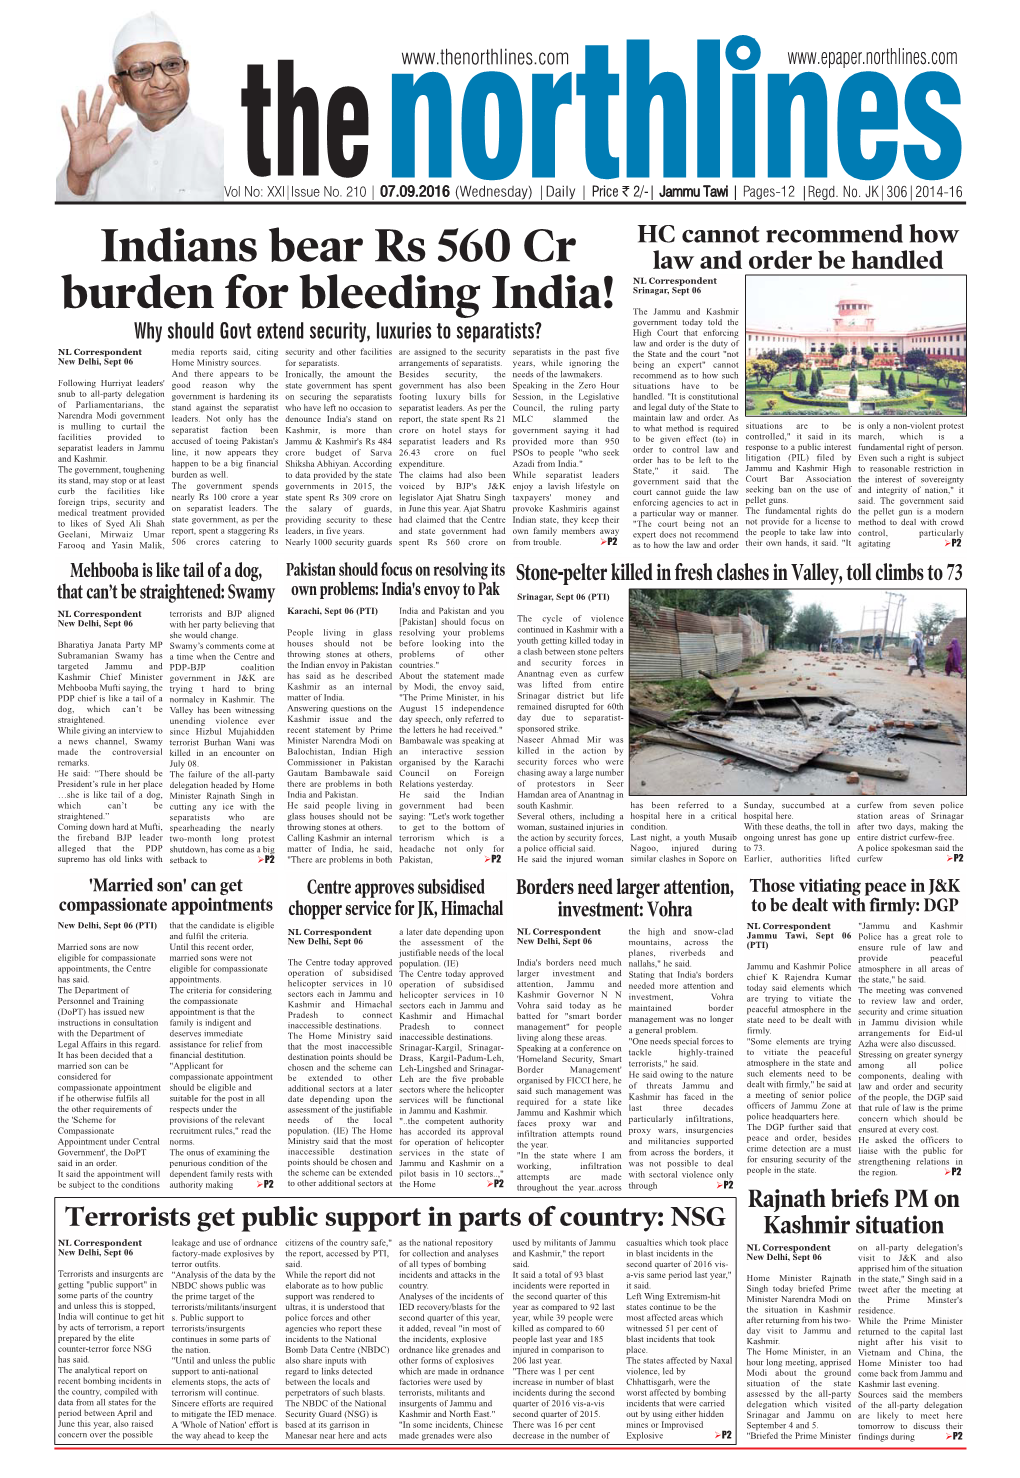 Indians Bear Rs 560 Cr Burden for Bleeding India!